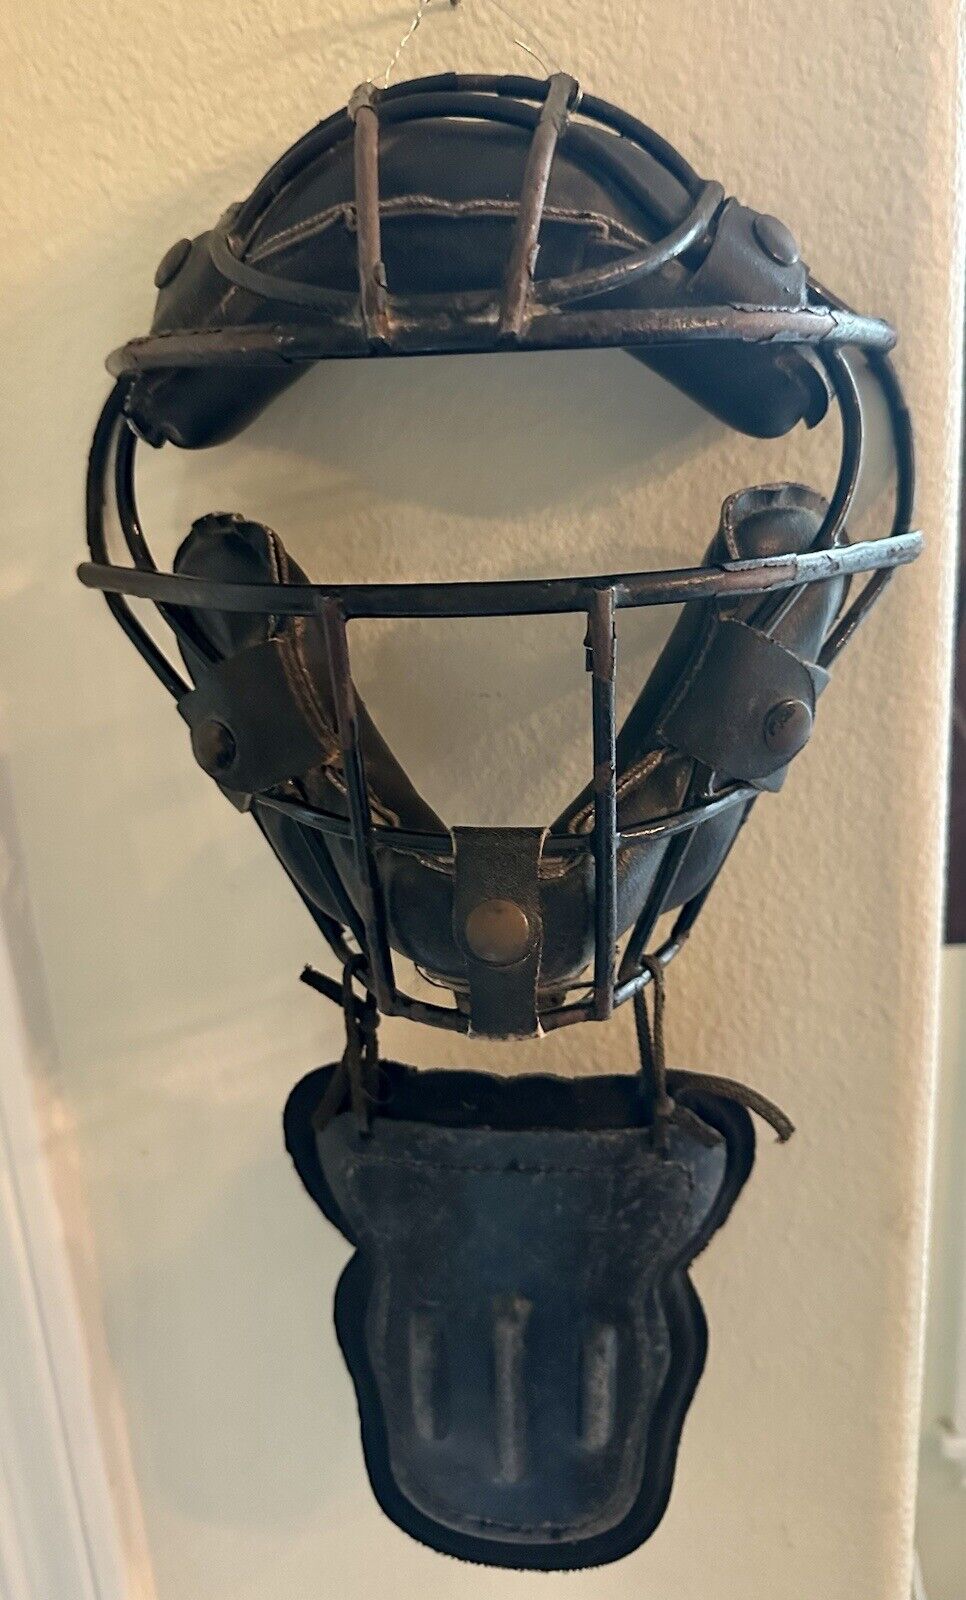 Vintage Baseball Childs Catcher’s Mask with Neck shield.